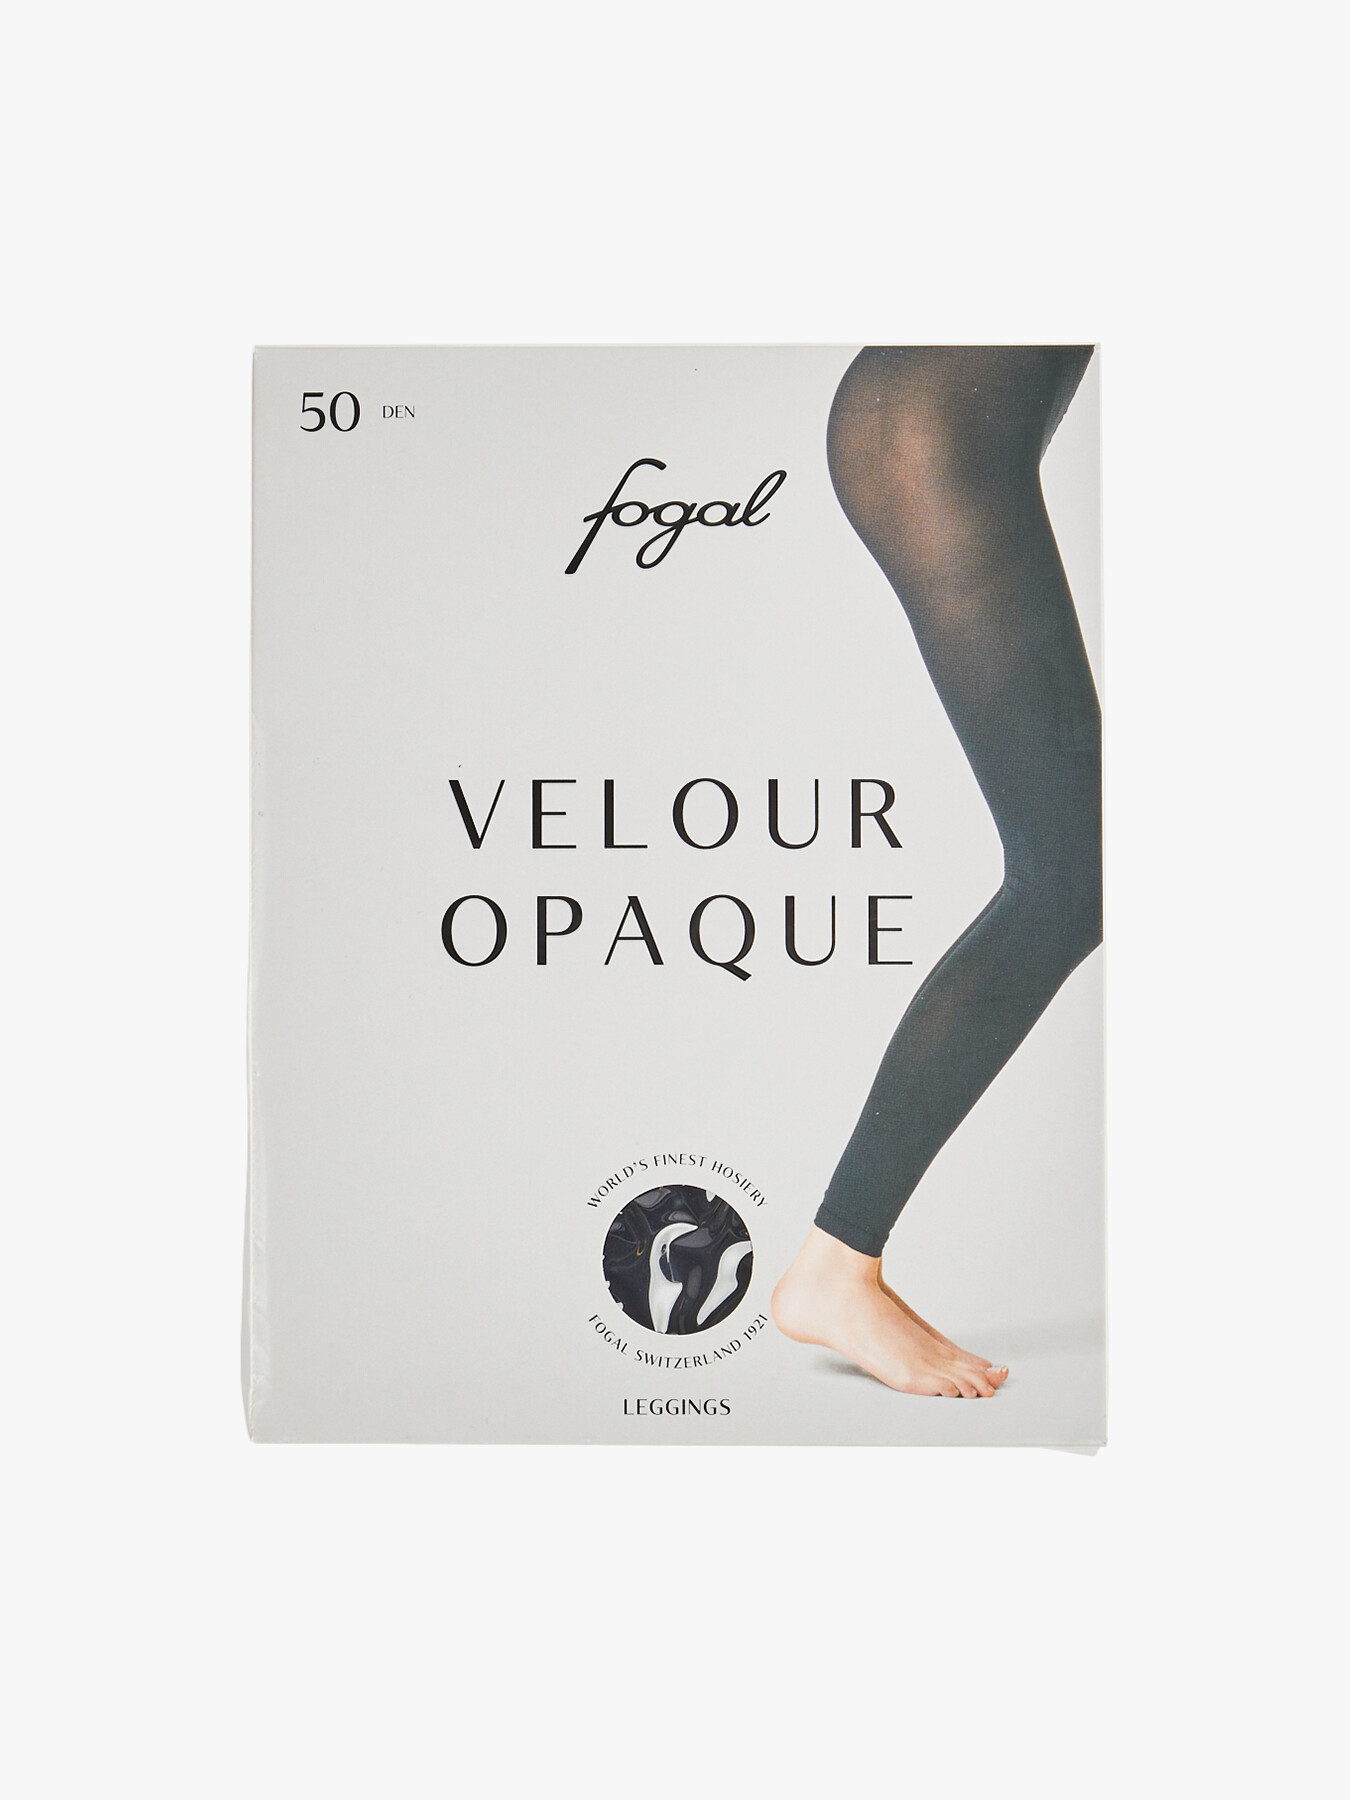 Fogal Velour Opaque 50 Denier Leggings, Footless